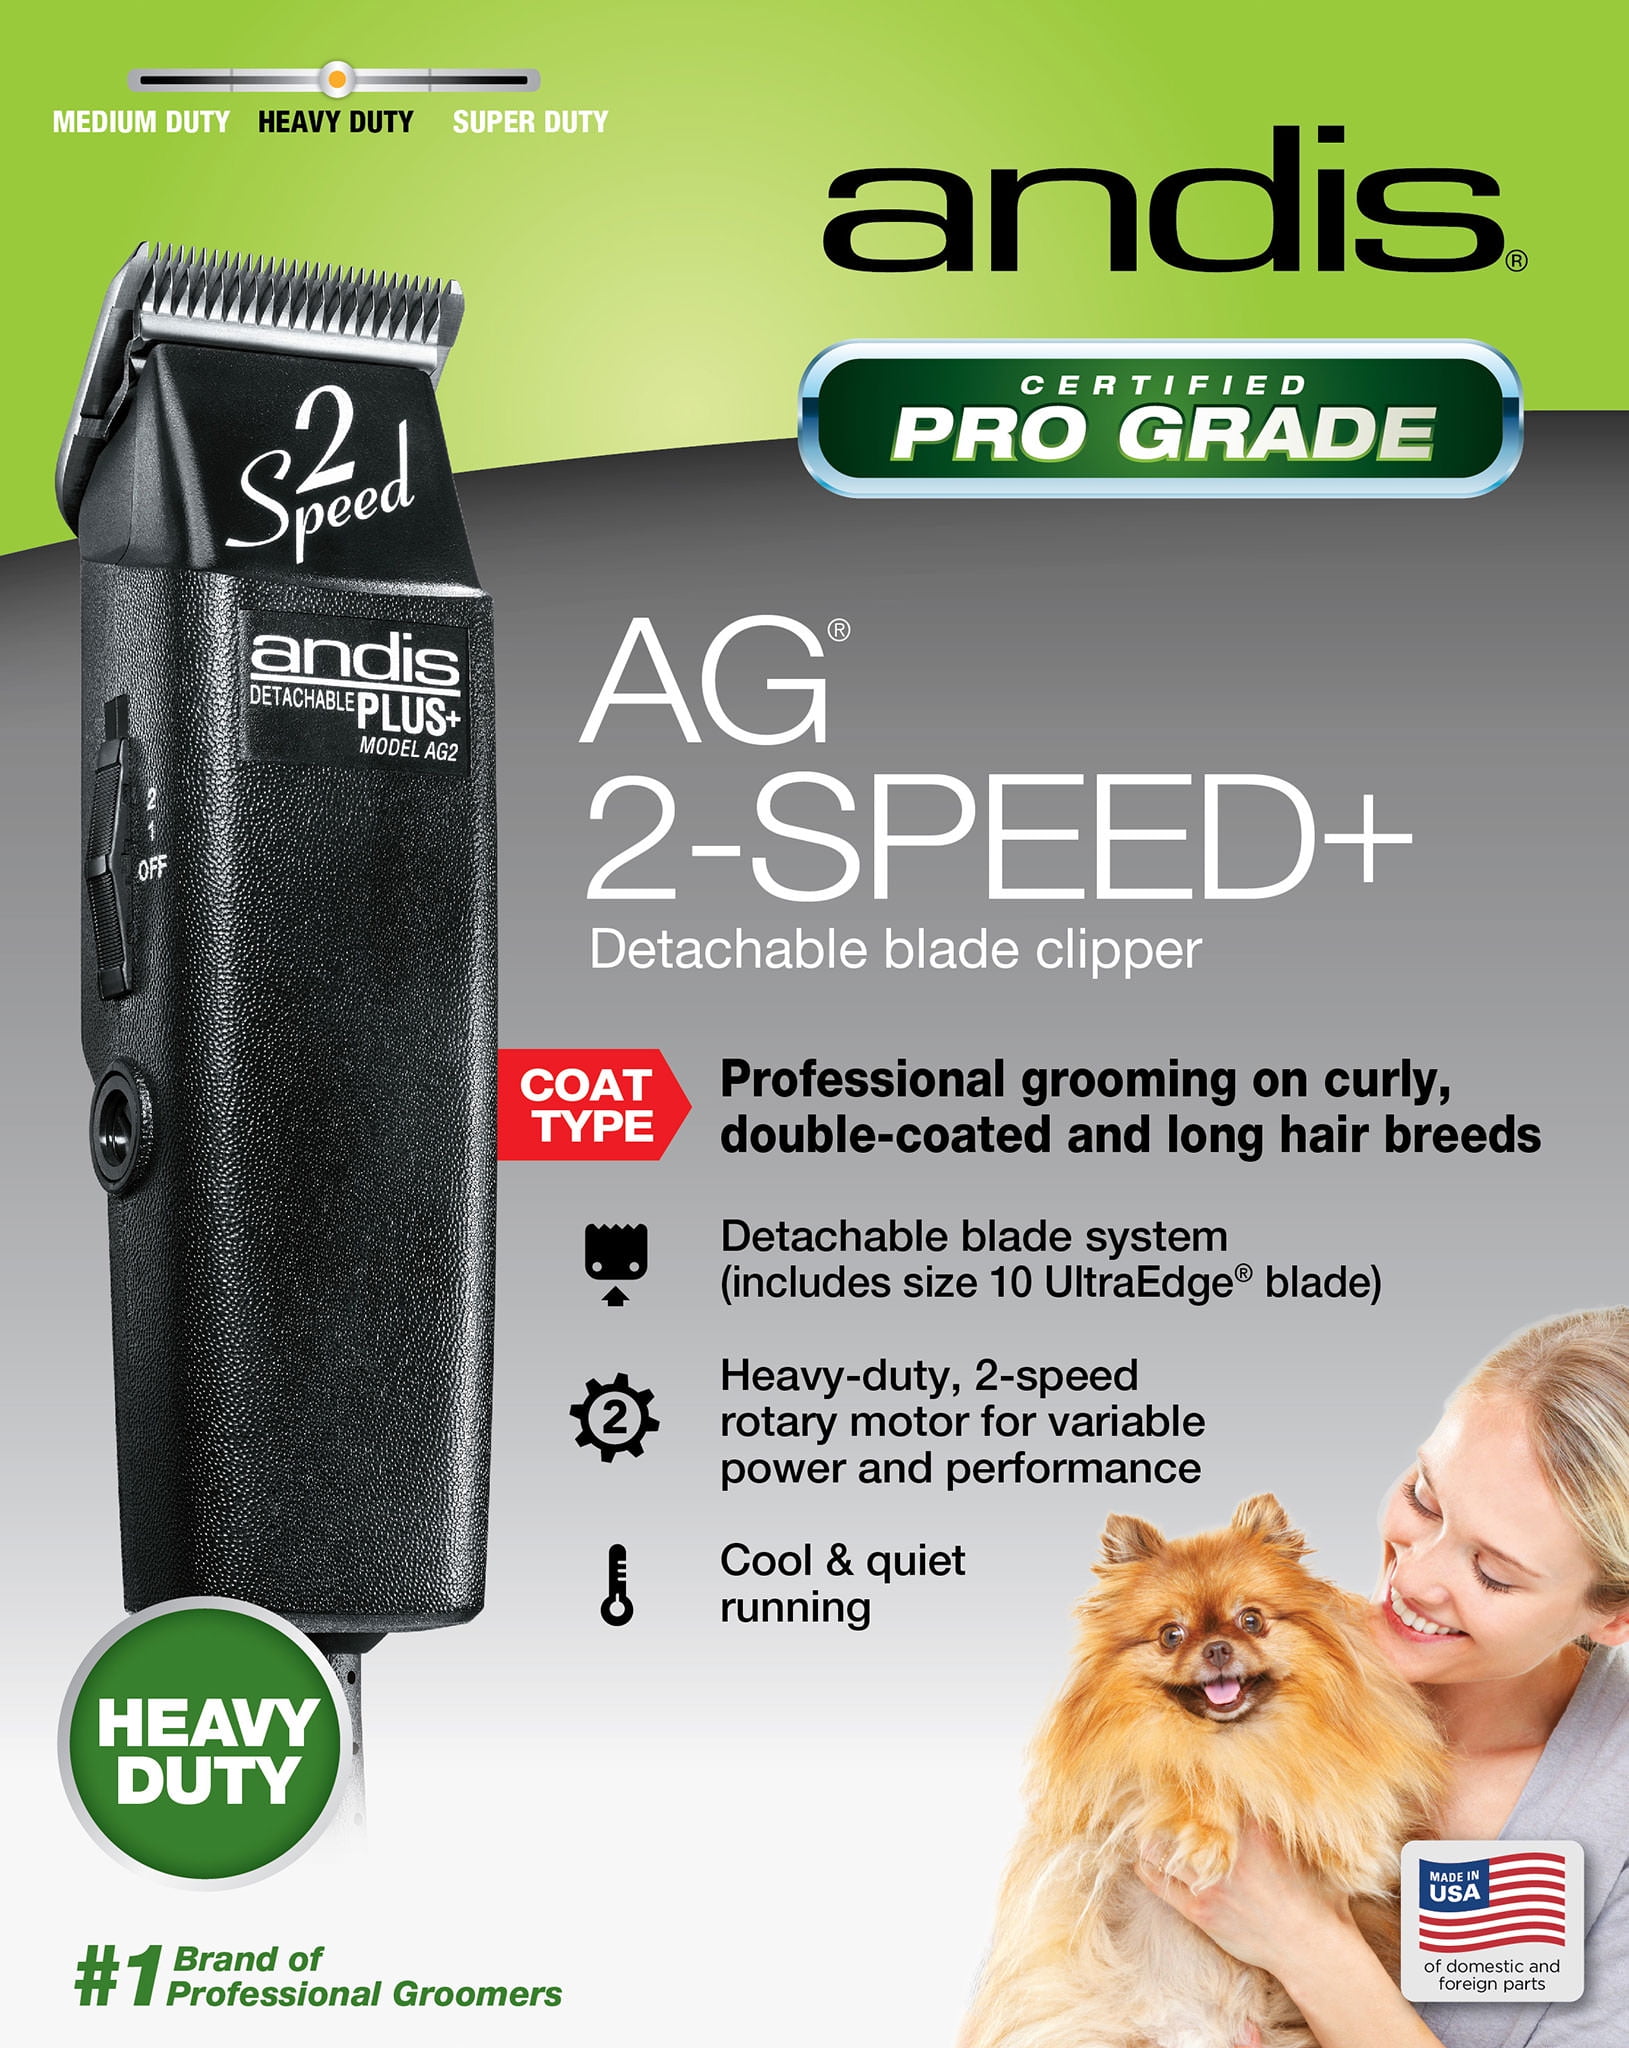 Andis Animal Pro Grade AG 2-Speed+ 